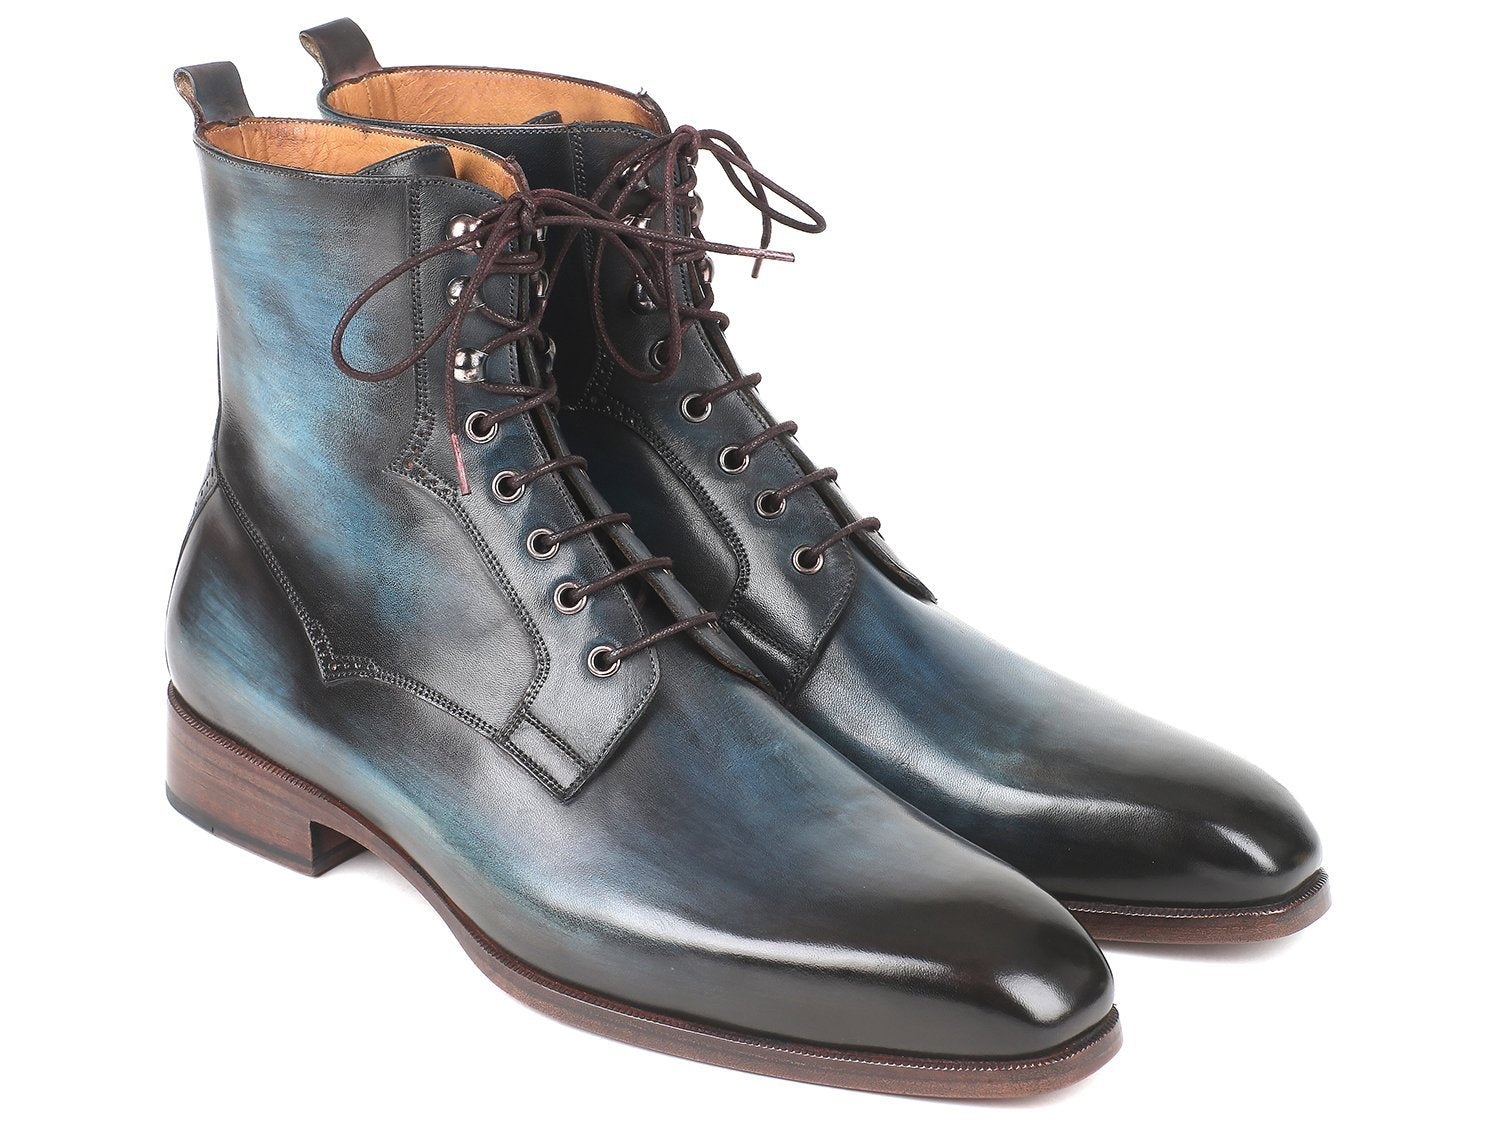 TEEK - Paul Parkman Blue & Brown Leather Boots SHOES theteekdotcom   